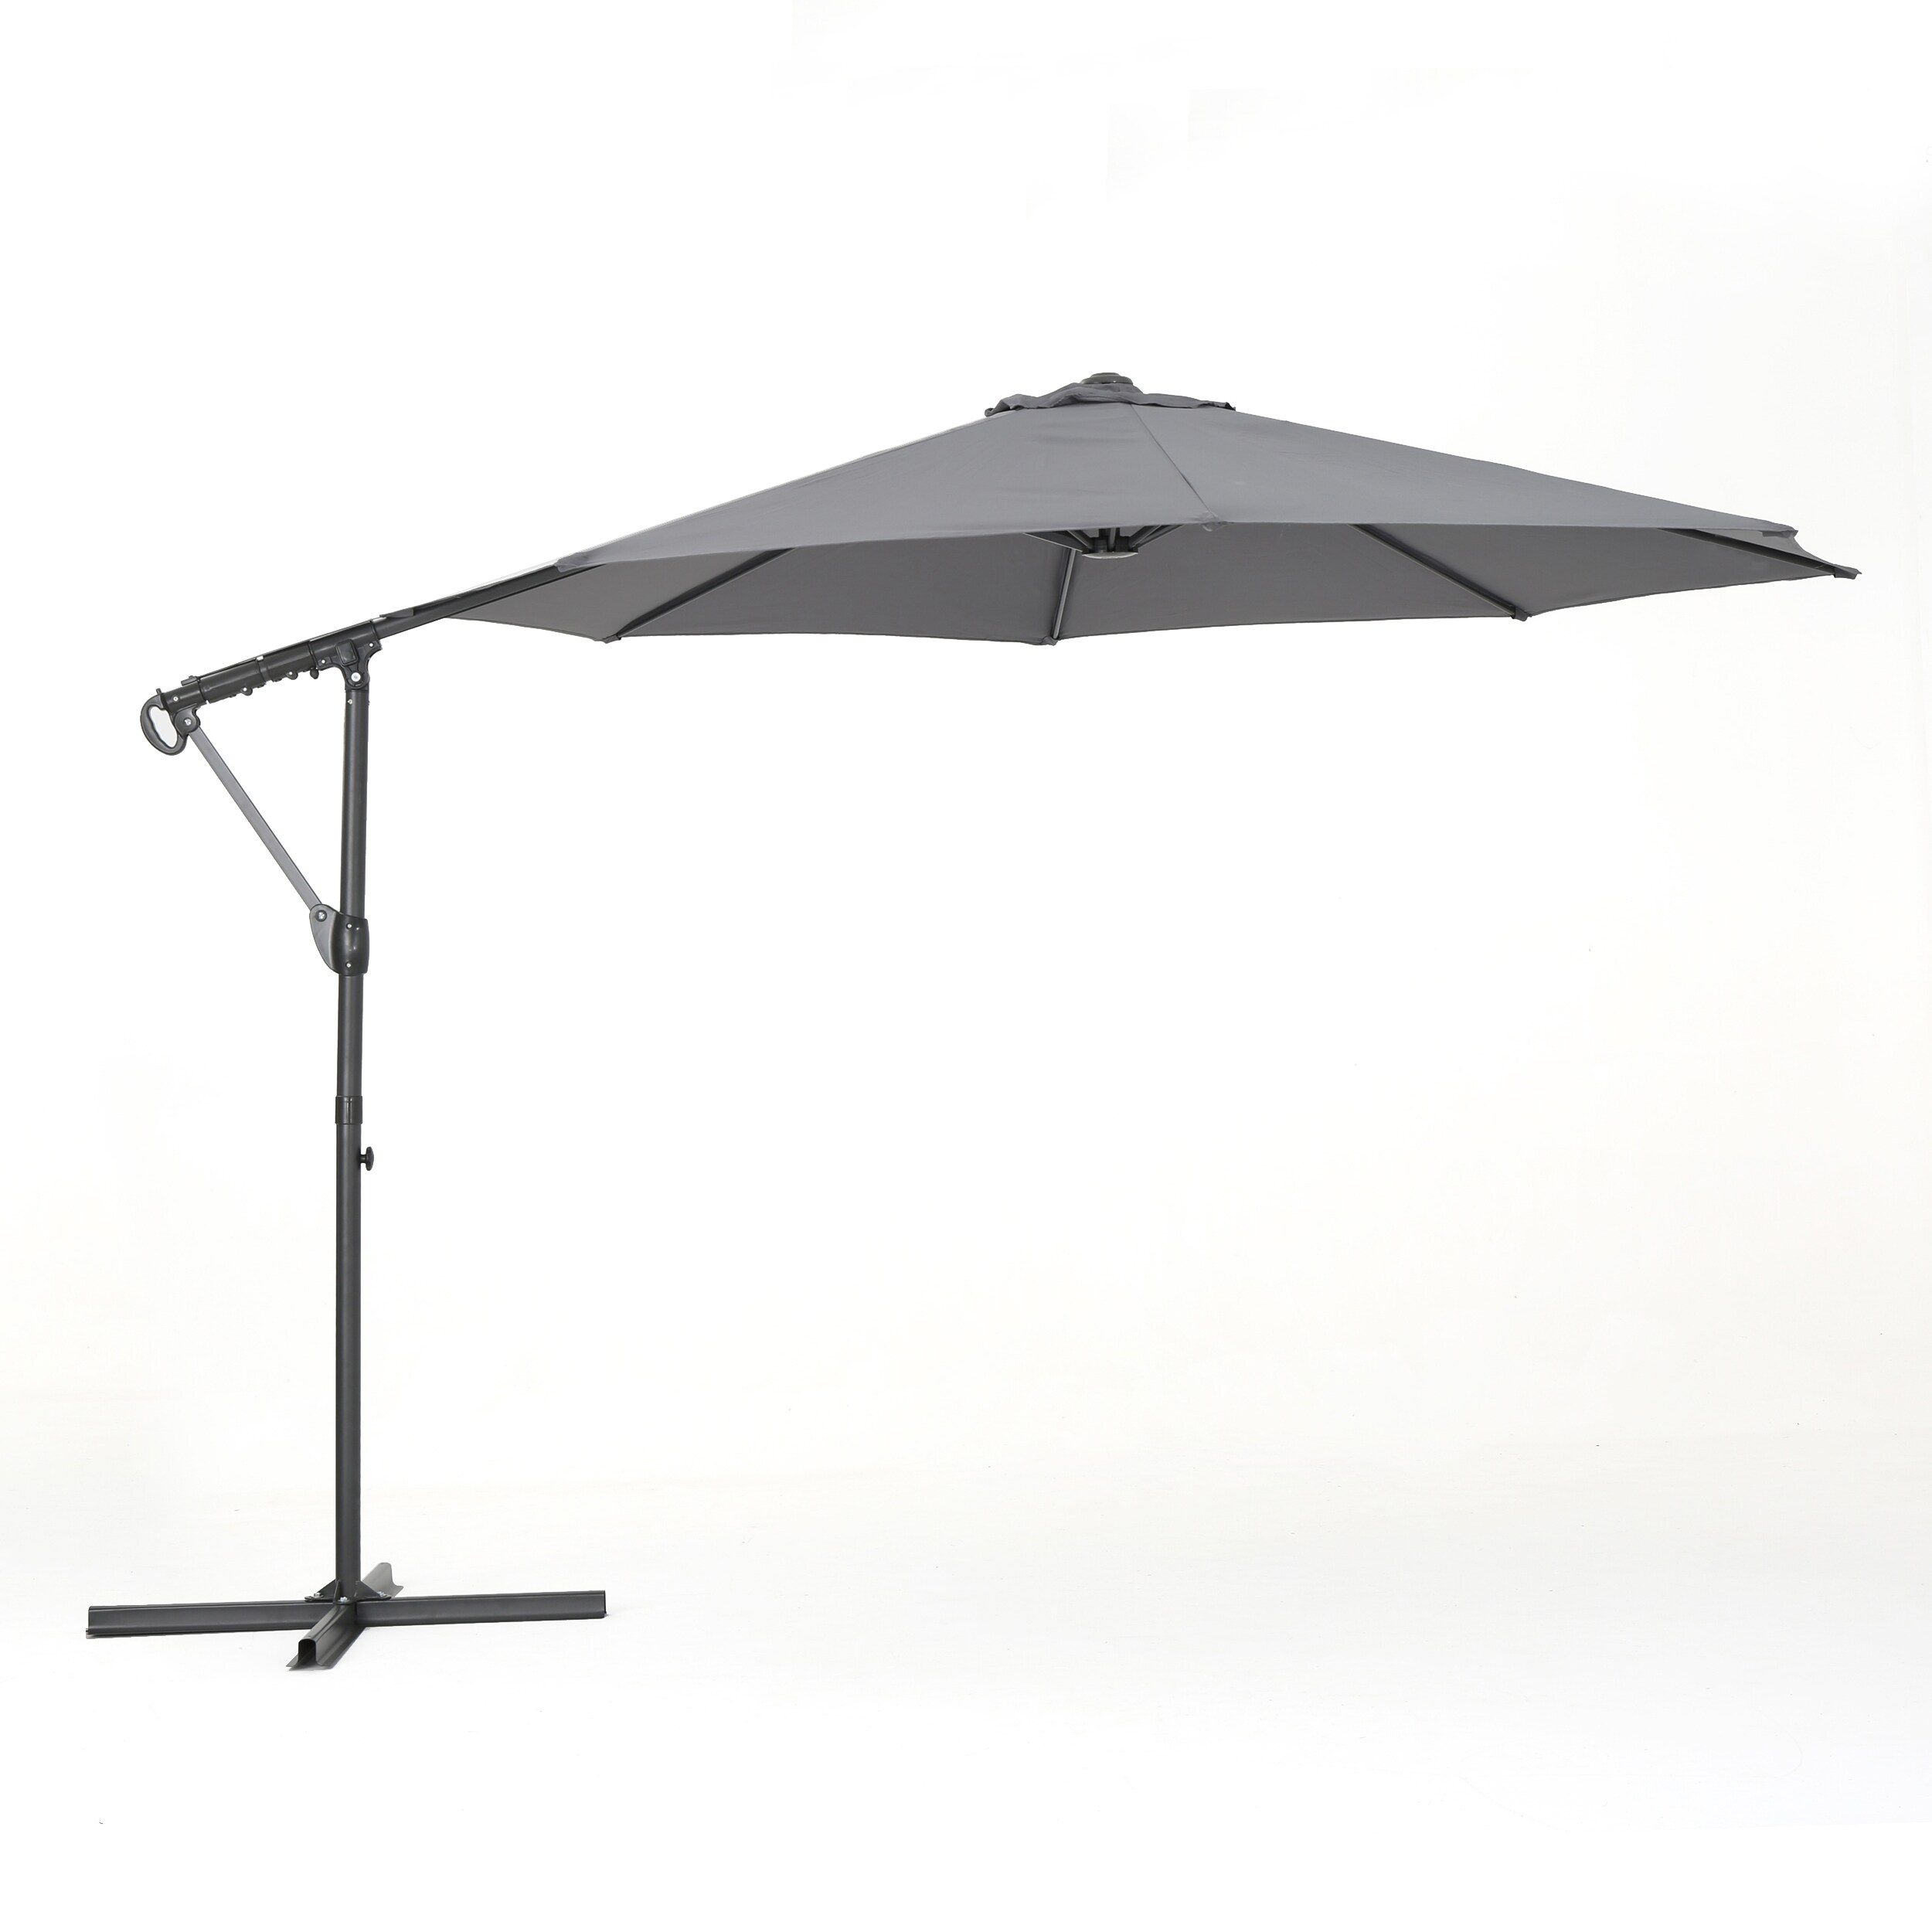 leraar Clancy Trekken Best Selling Home Decor 9.58-ft Grey Offset Patio Umbrella with Base in the  Patio Umbrellas department at Lowes.com